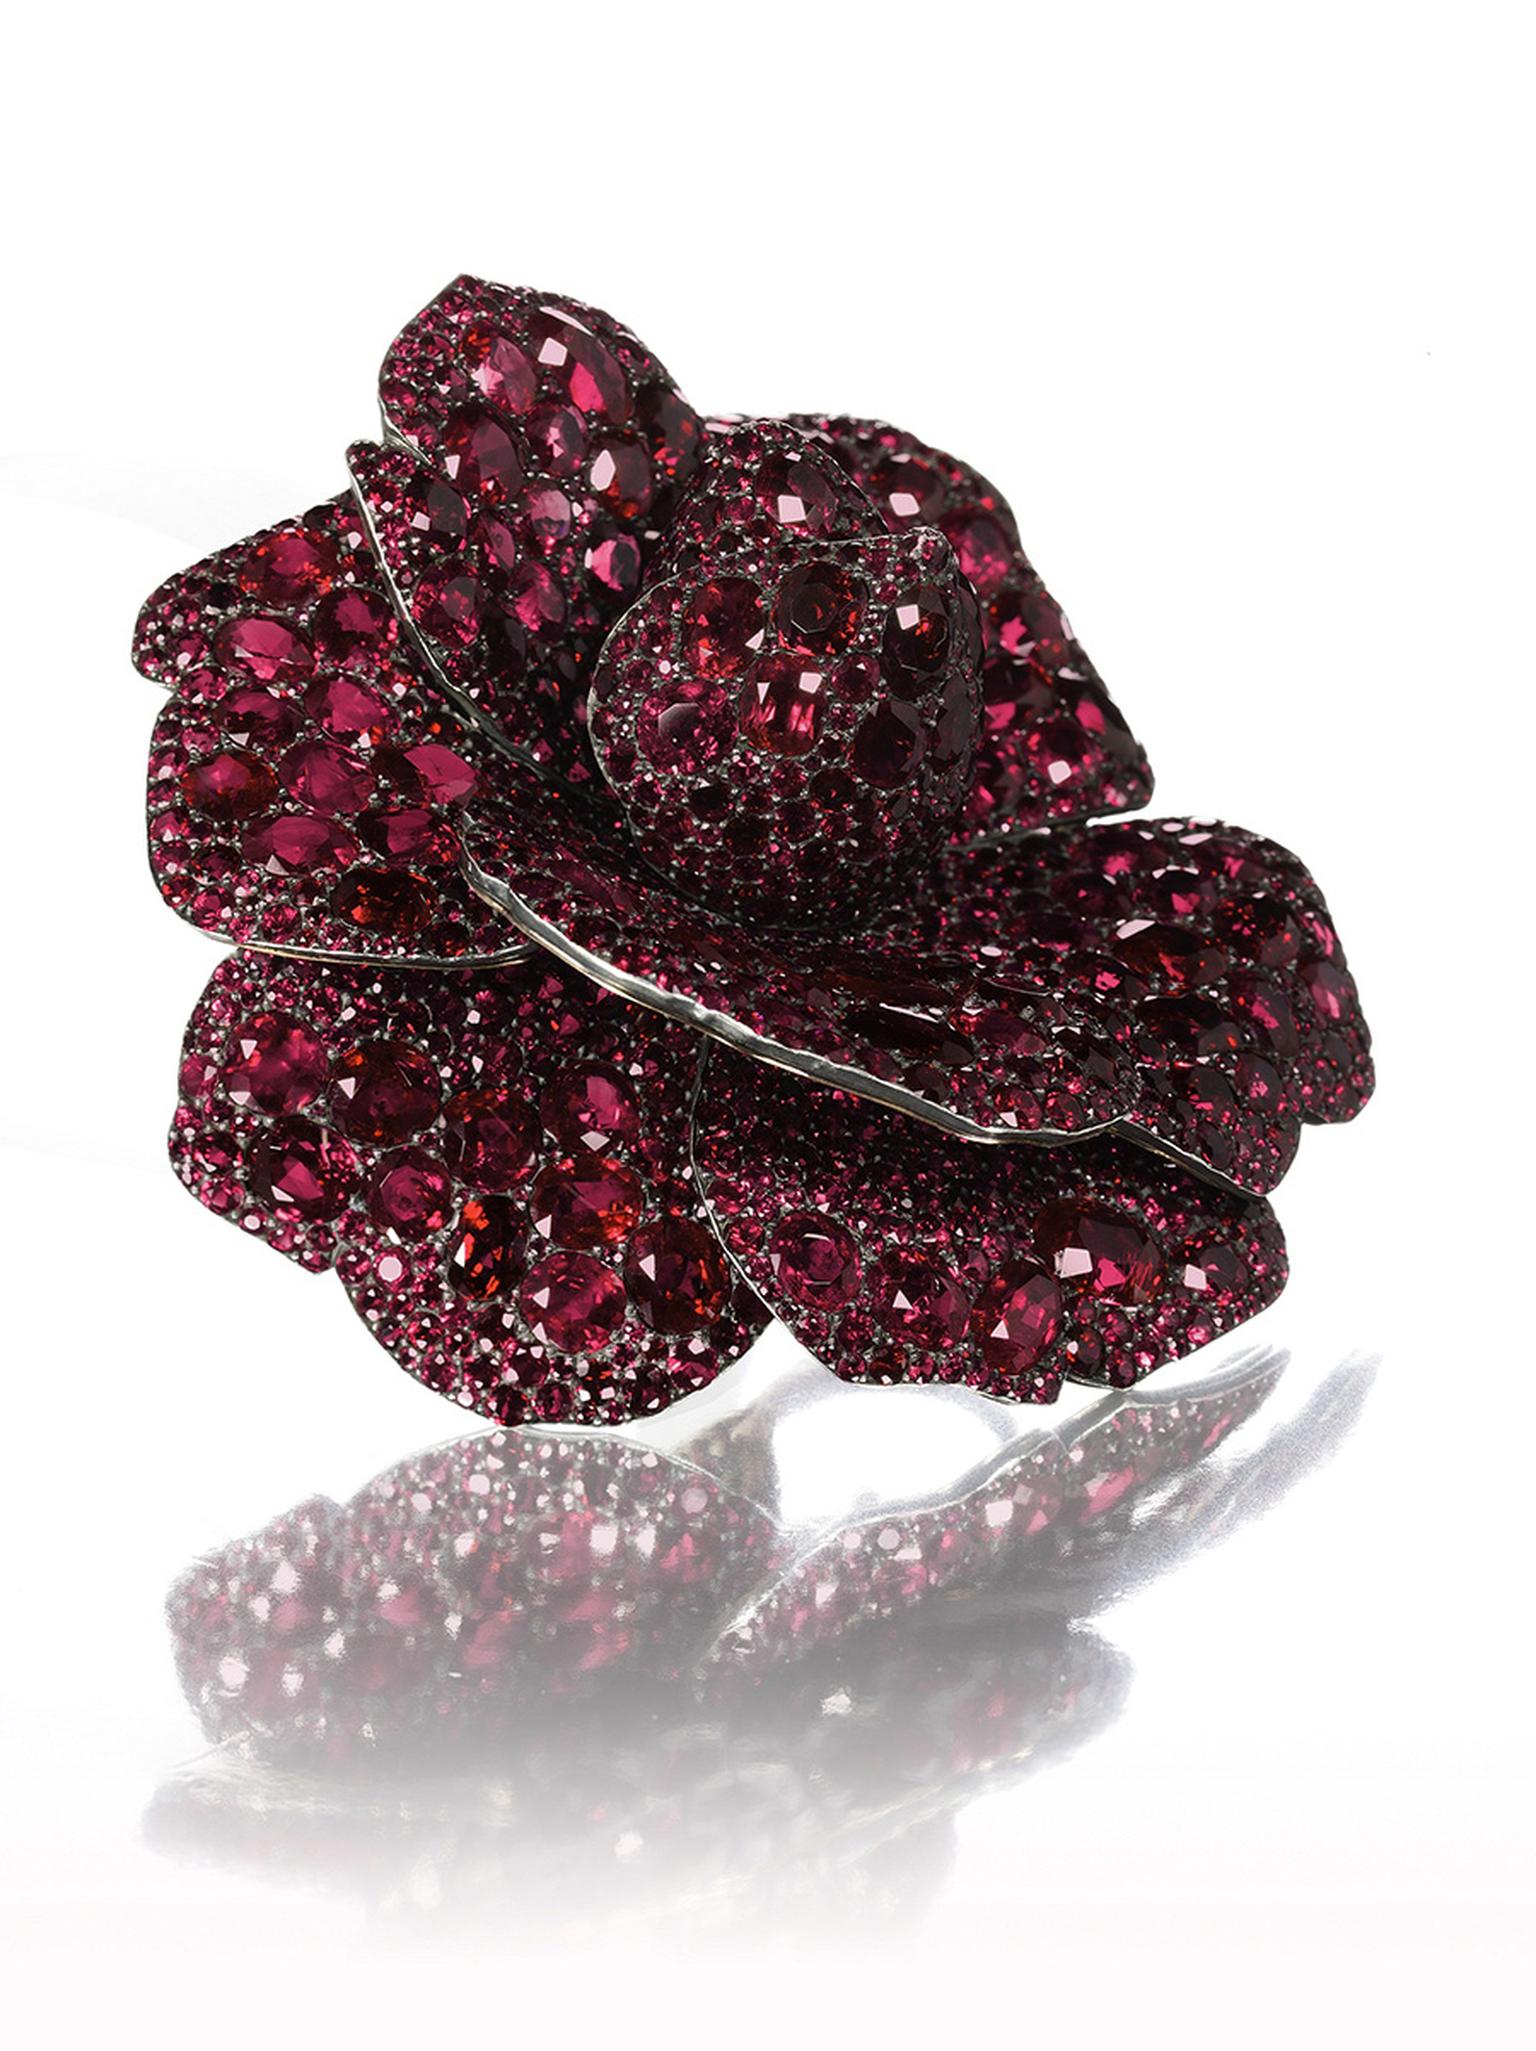 A-ruby-and-diamond-Camellia-flower-brooch,-by-JAR,-2003.jpg